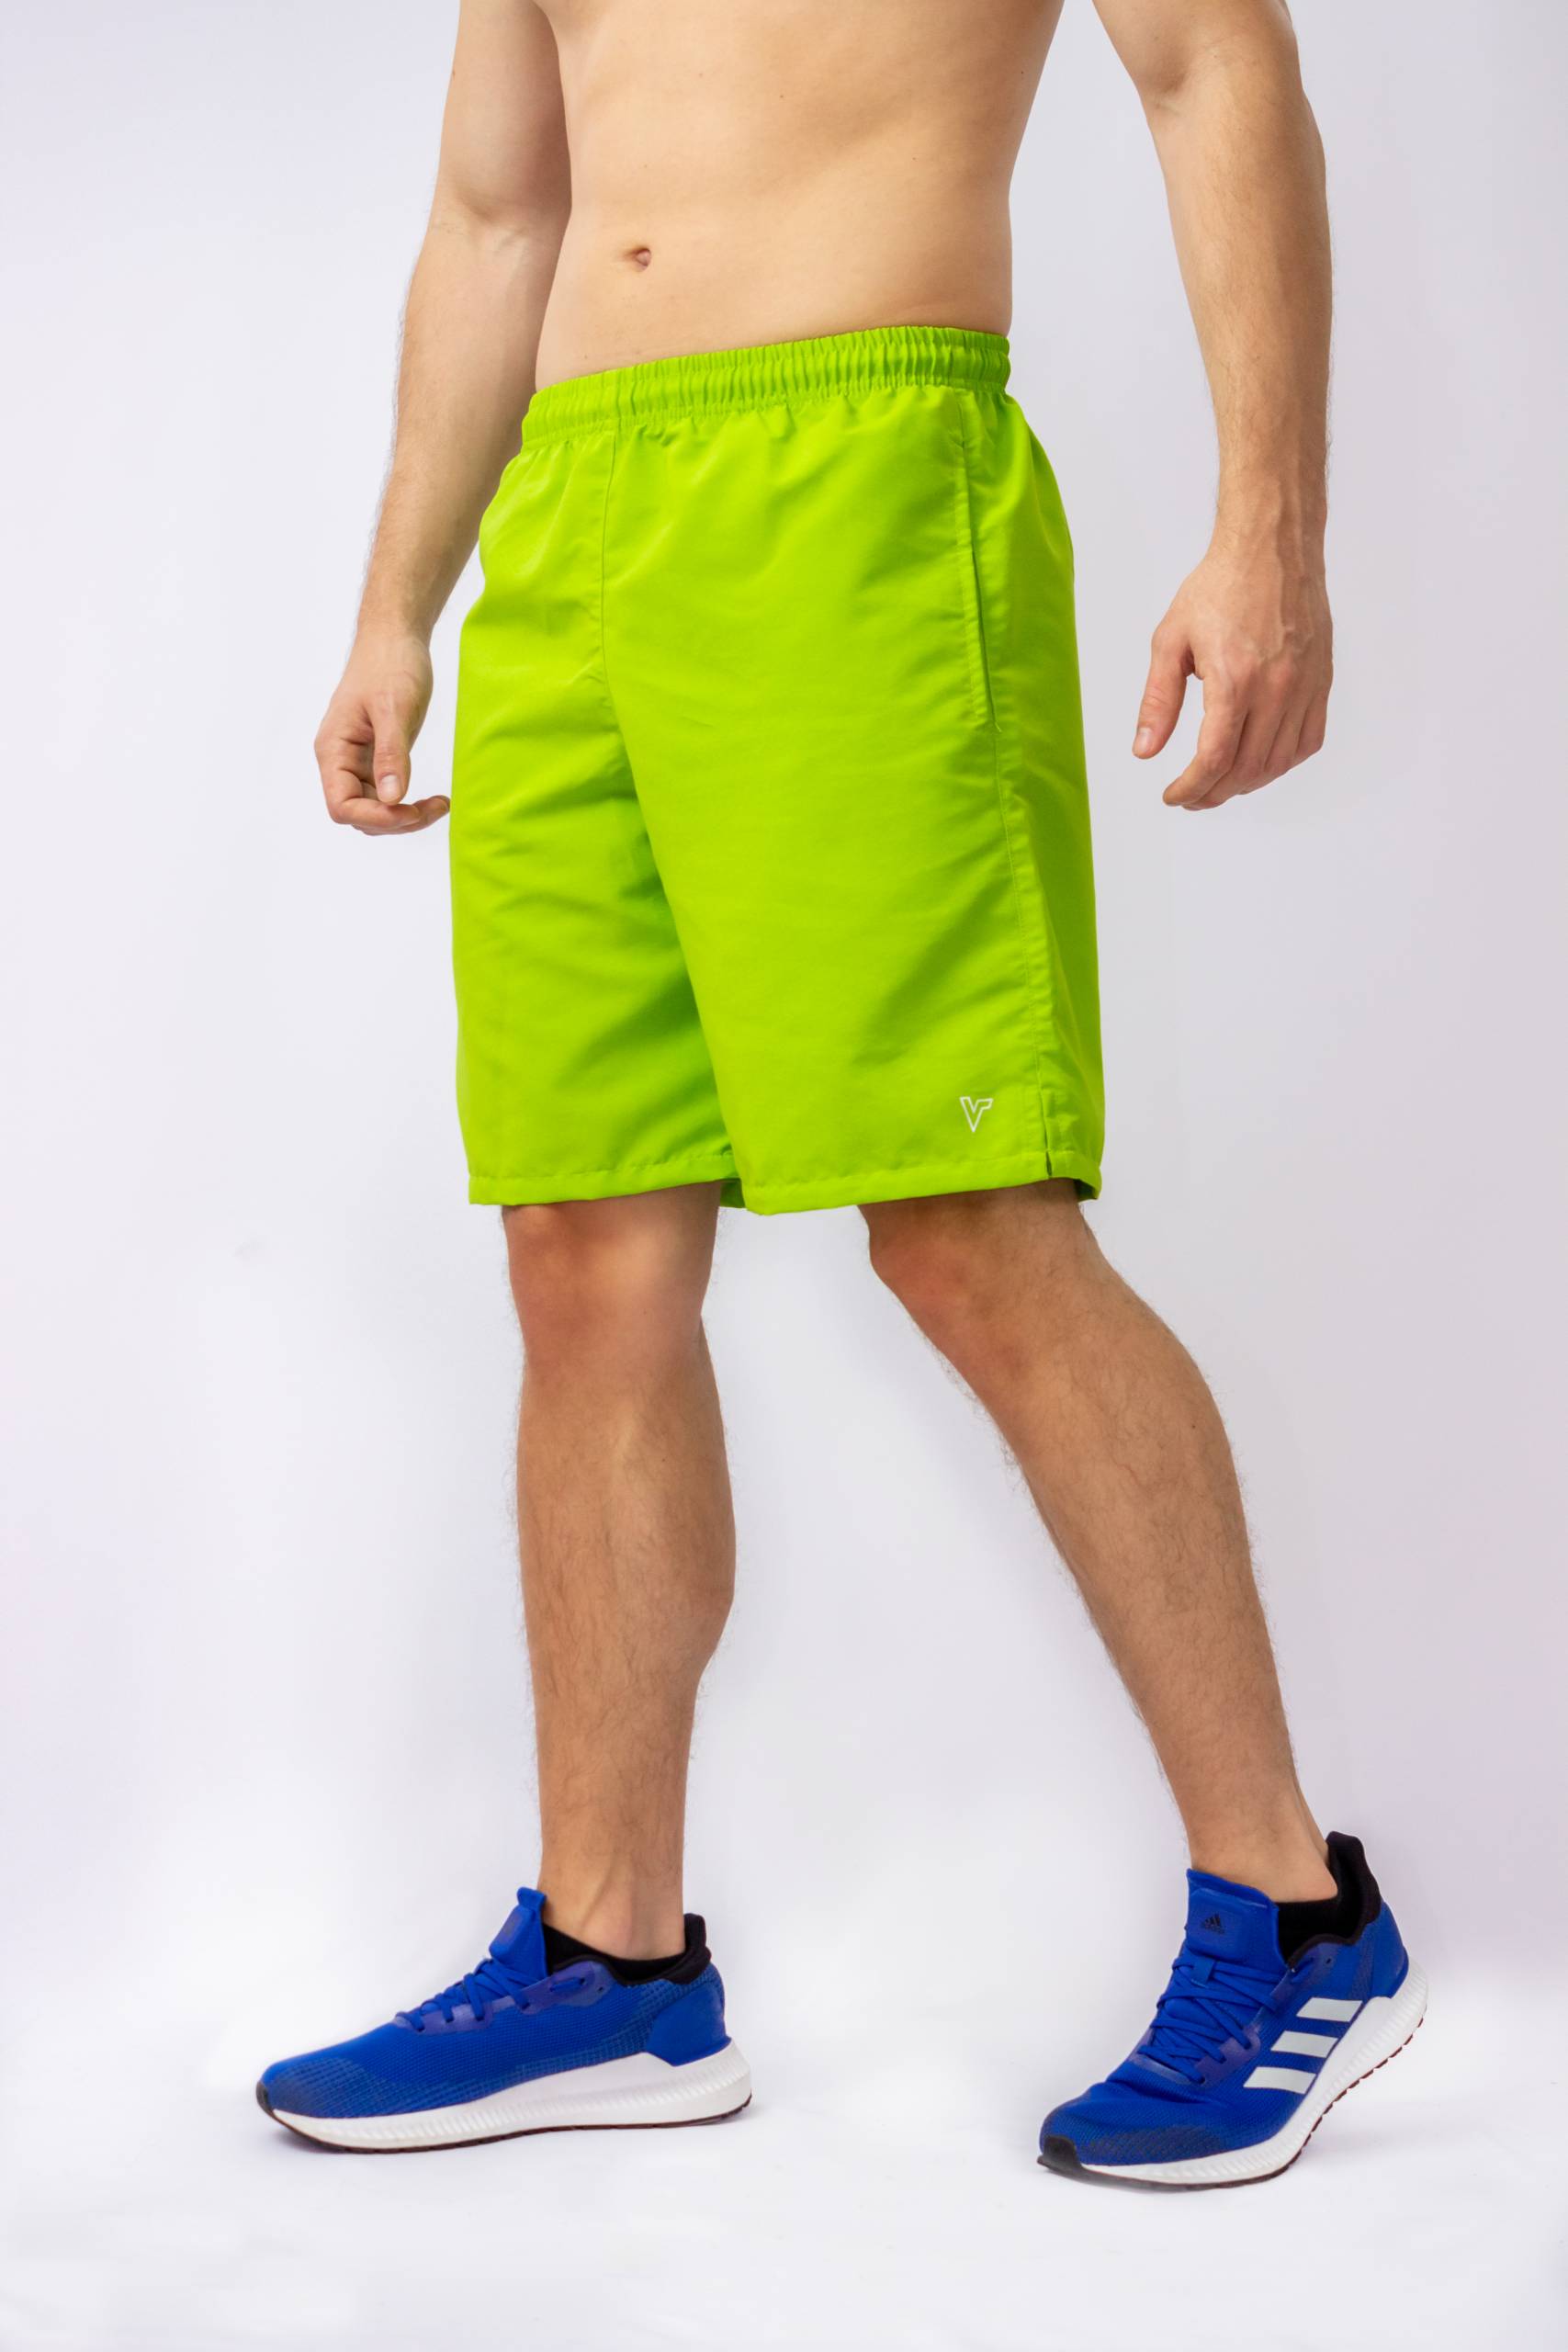 Pantaloneta Básica Neon